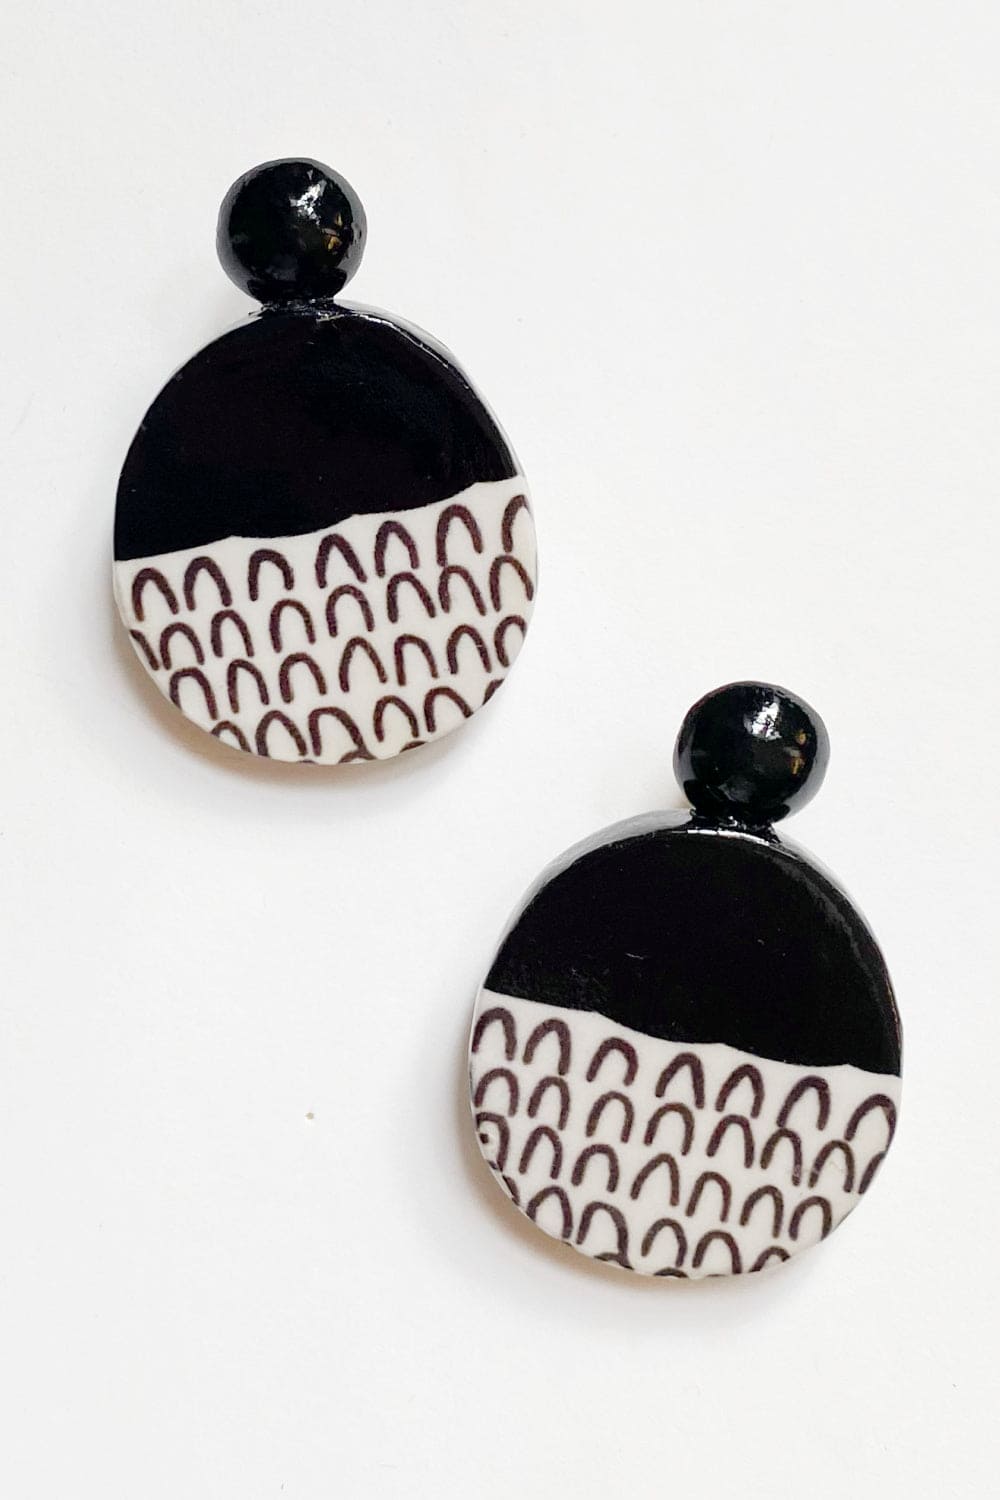 Oval shaped decoupage earrings. The top half is black and the bottom half has upside down u shape patterns.